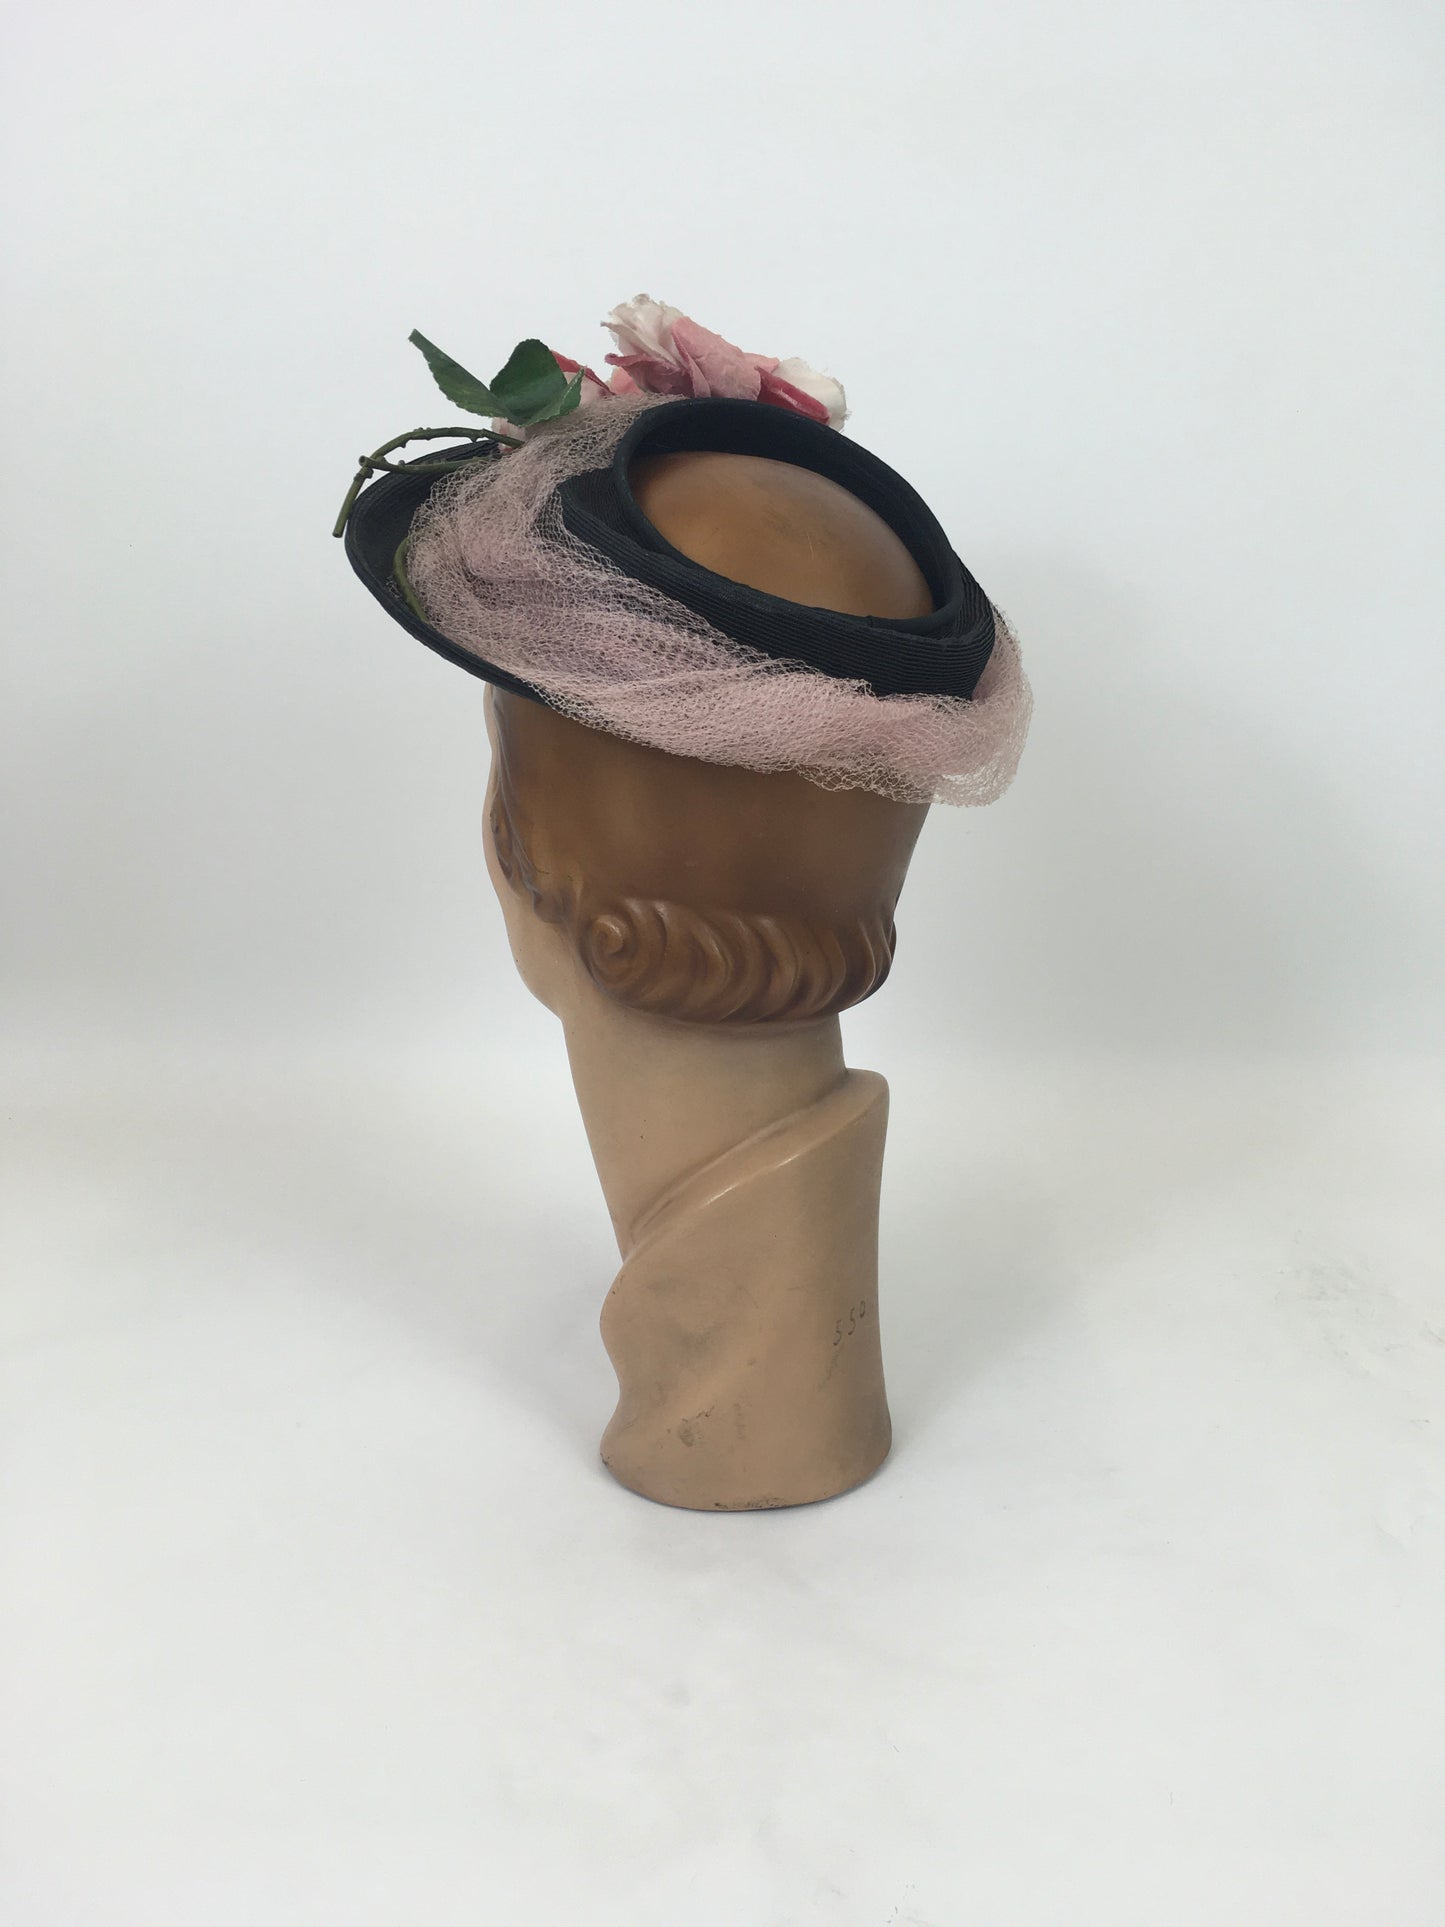 Original 1930's / 1940's Open Crown Hat - In Black with Original Floral Velvet Millinery Adornments